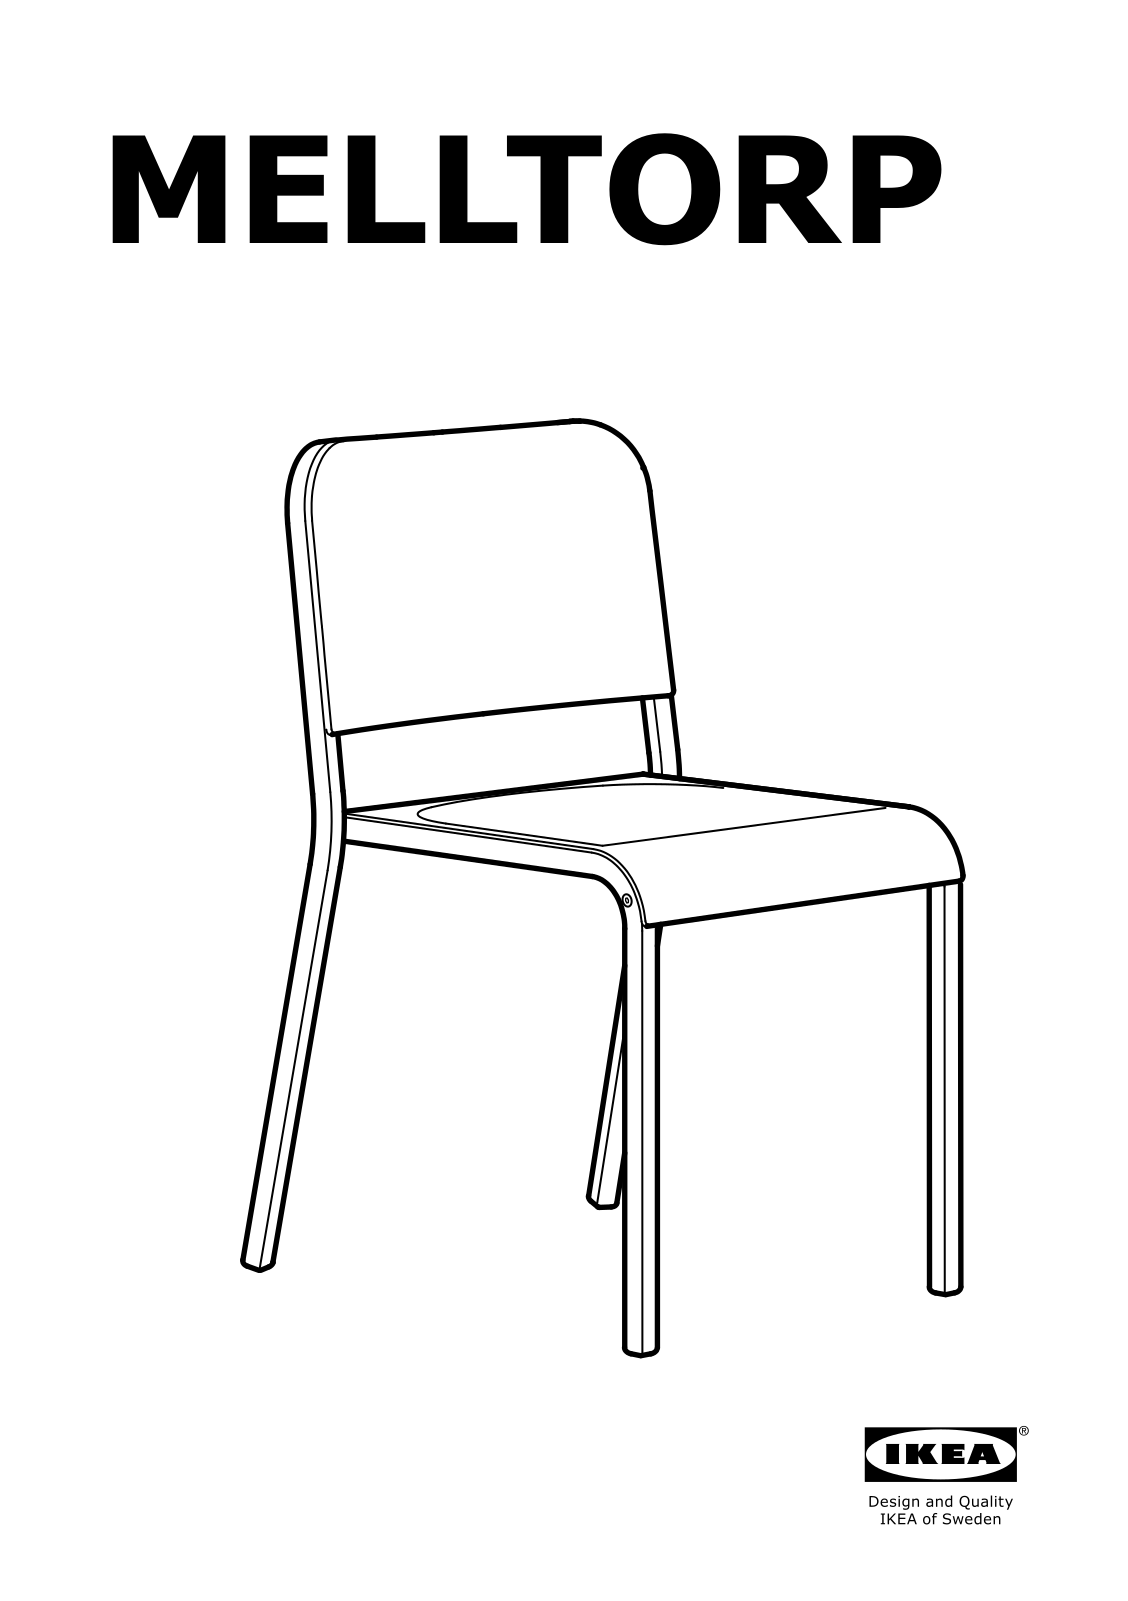 IKEA MELLTORP User Manual